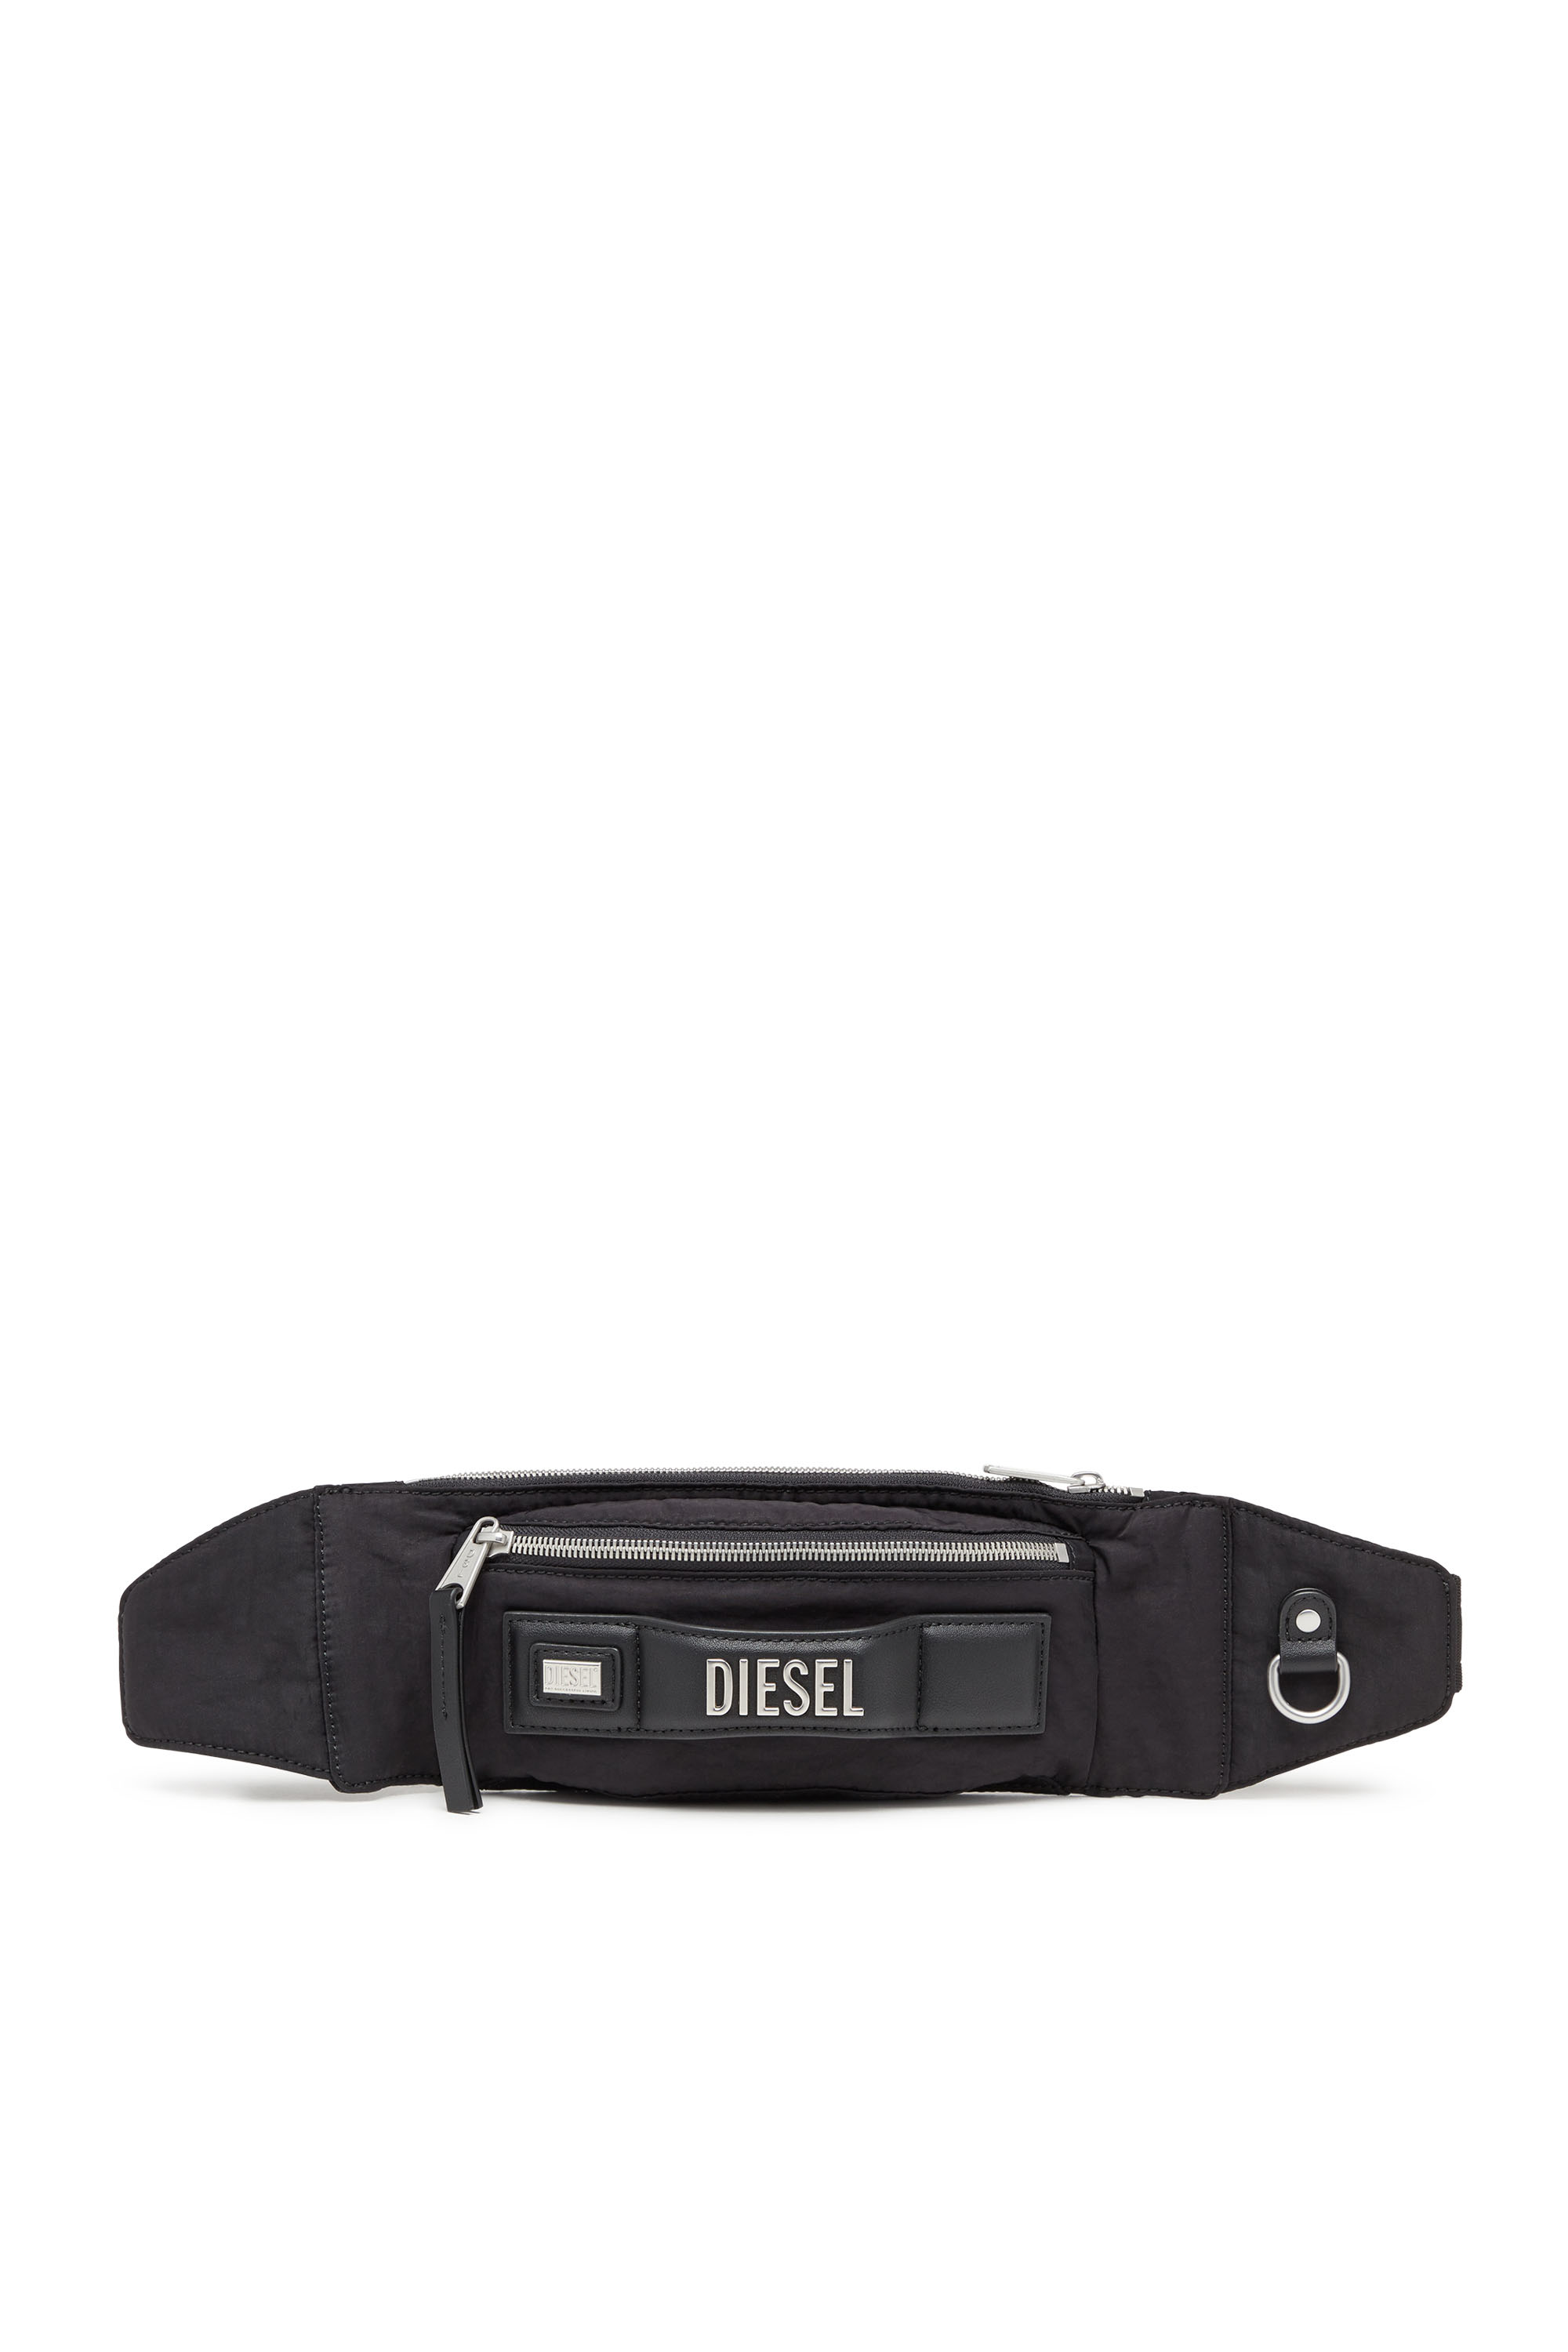 Diesel - Logos Belt Bag - Sac banane en nylon recyclé - Sacs ceinture - Mixte - Noir